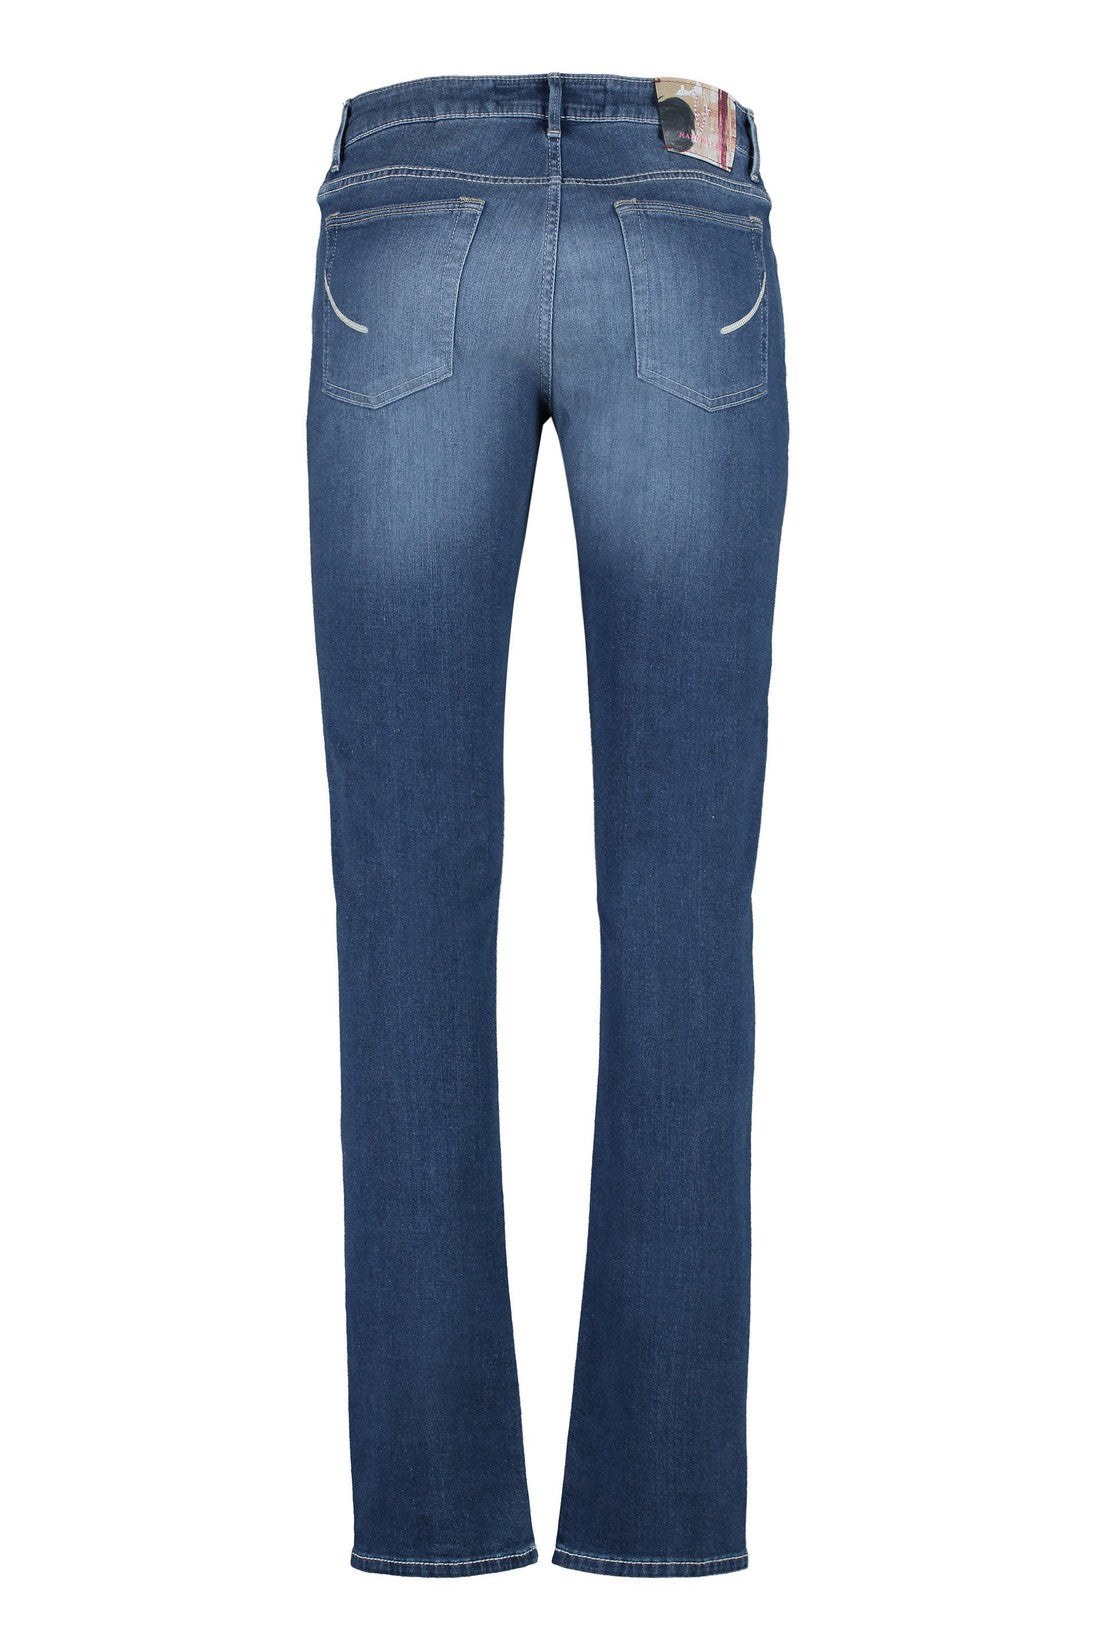 HANDPICKED-OUTLET-SALE-Ravello regular fit jeans-ARCHIVIST